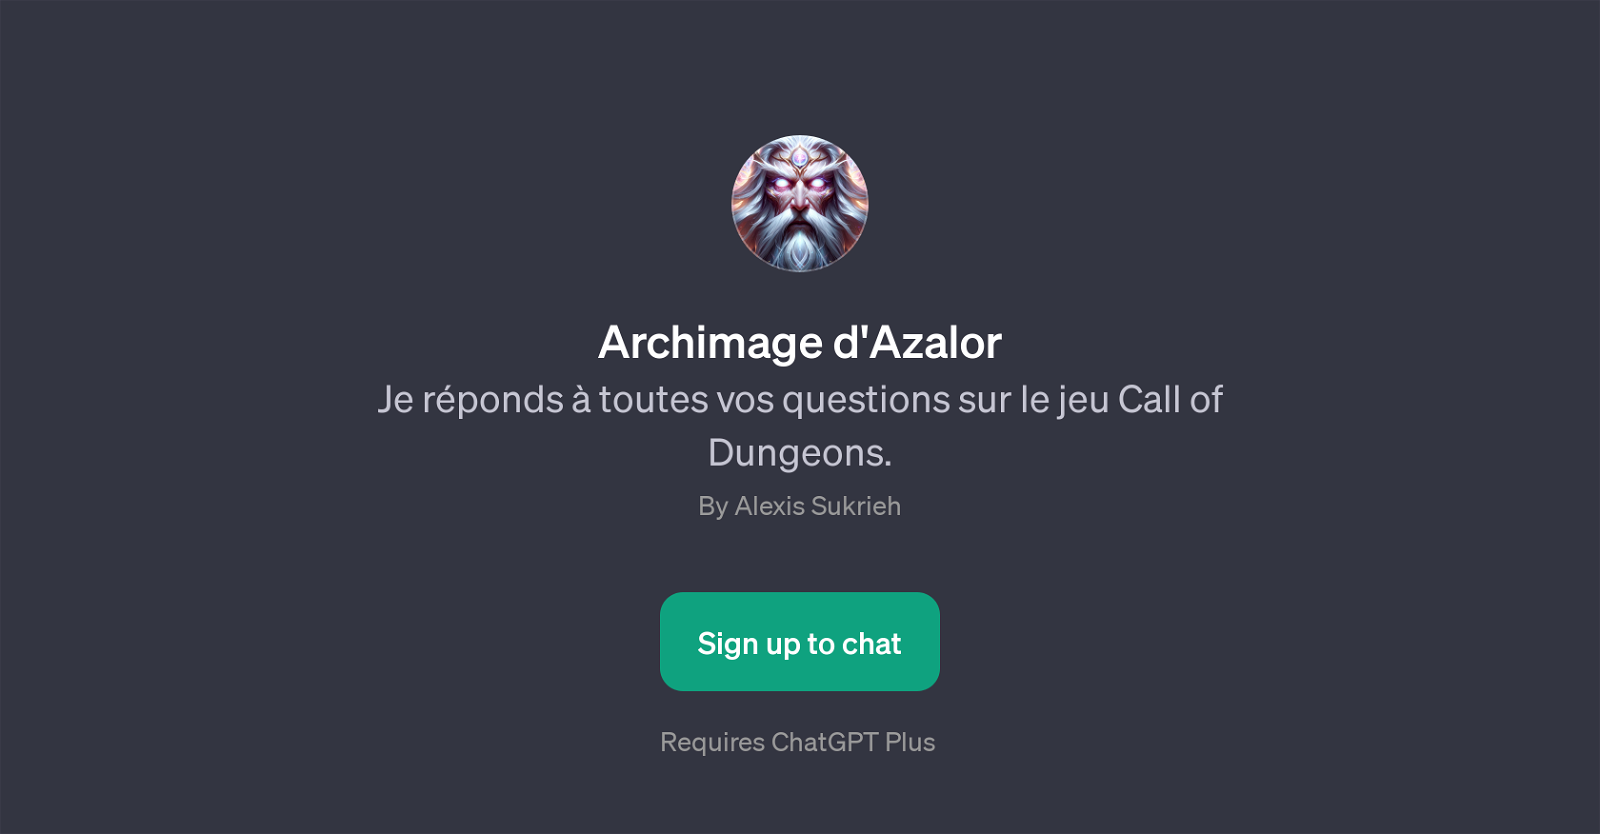 Archimage d'Azalor website